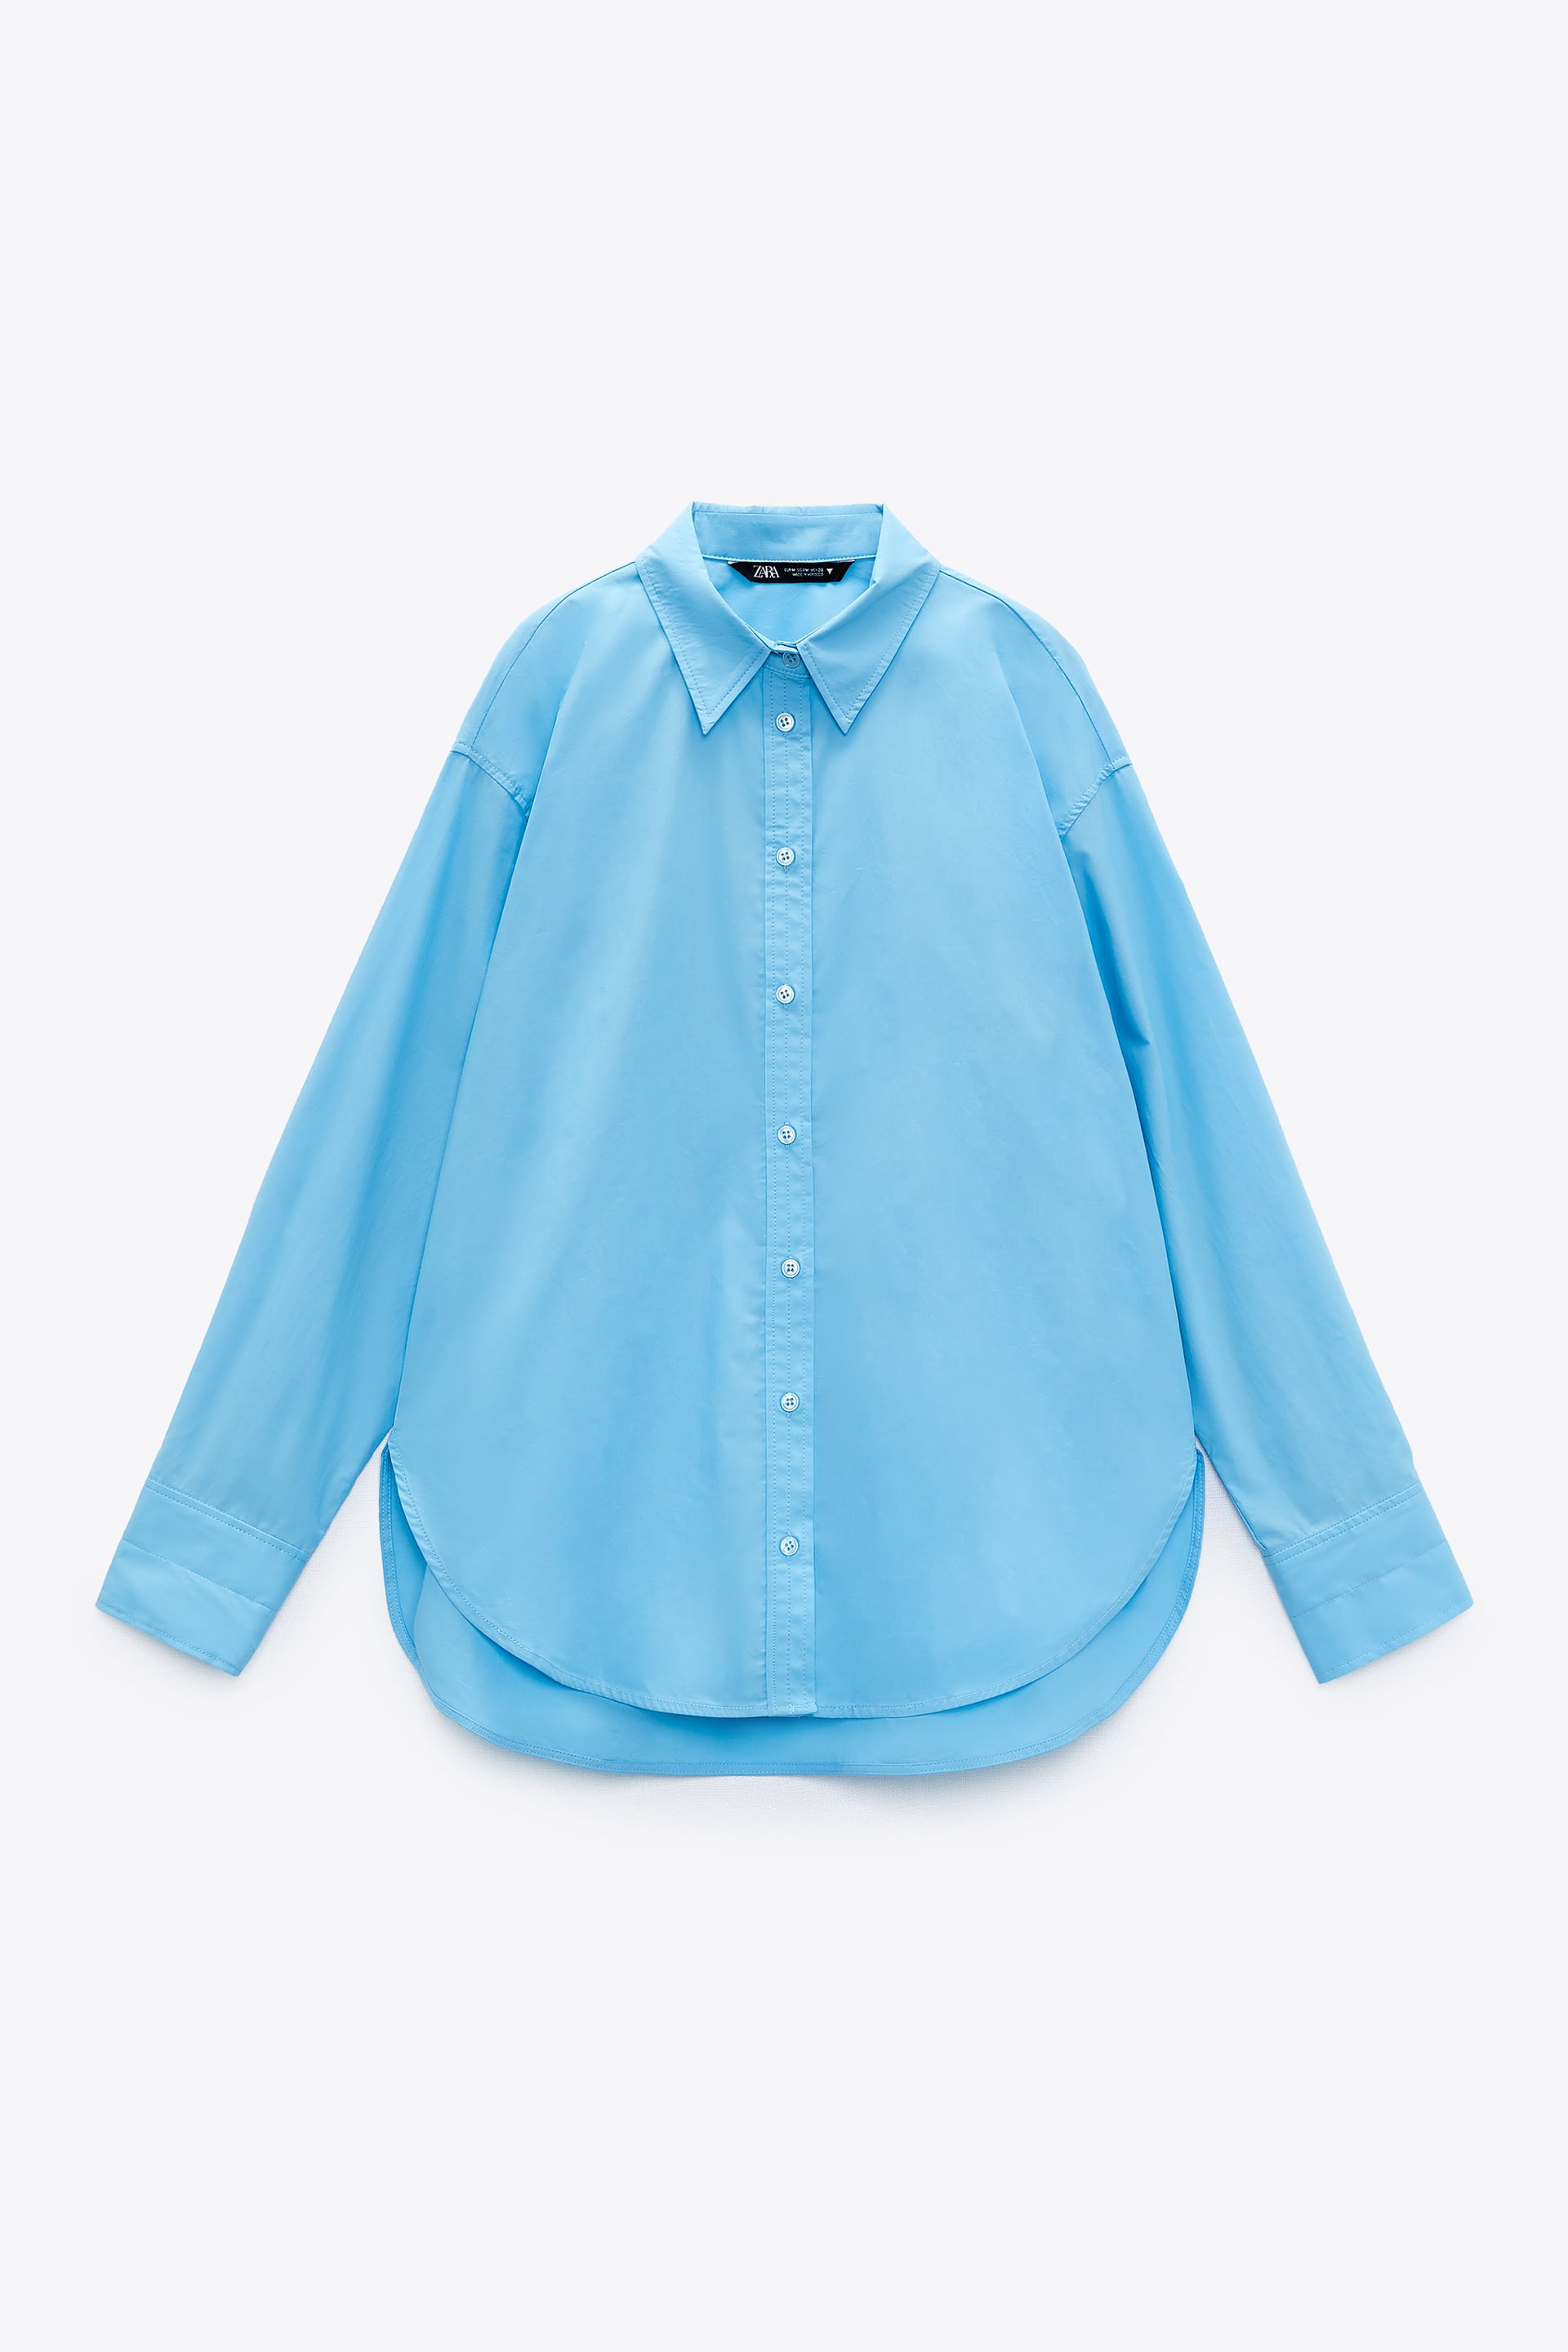 Zara Poplin Shirt